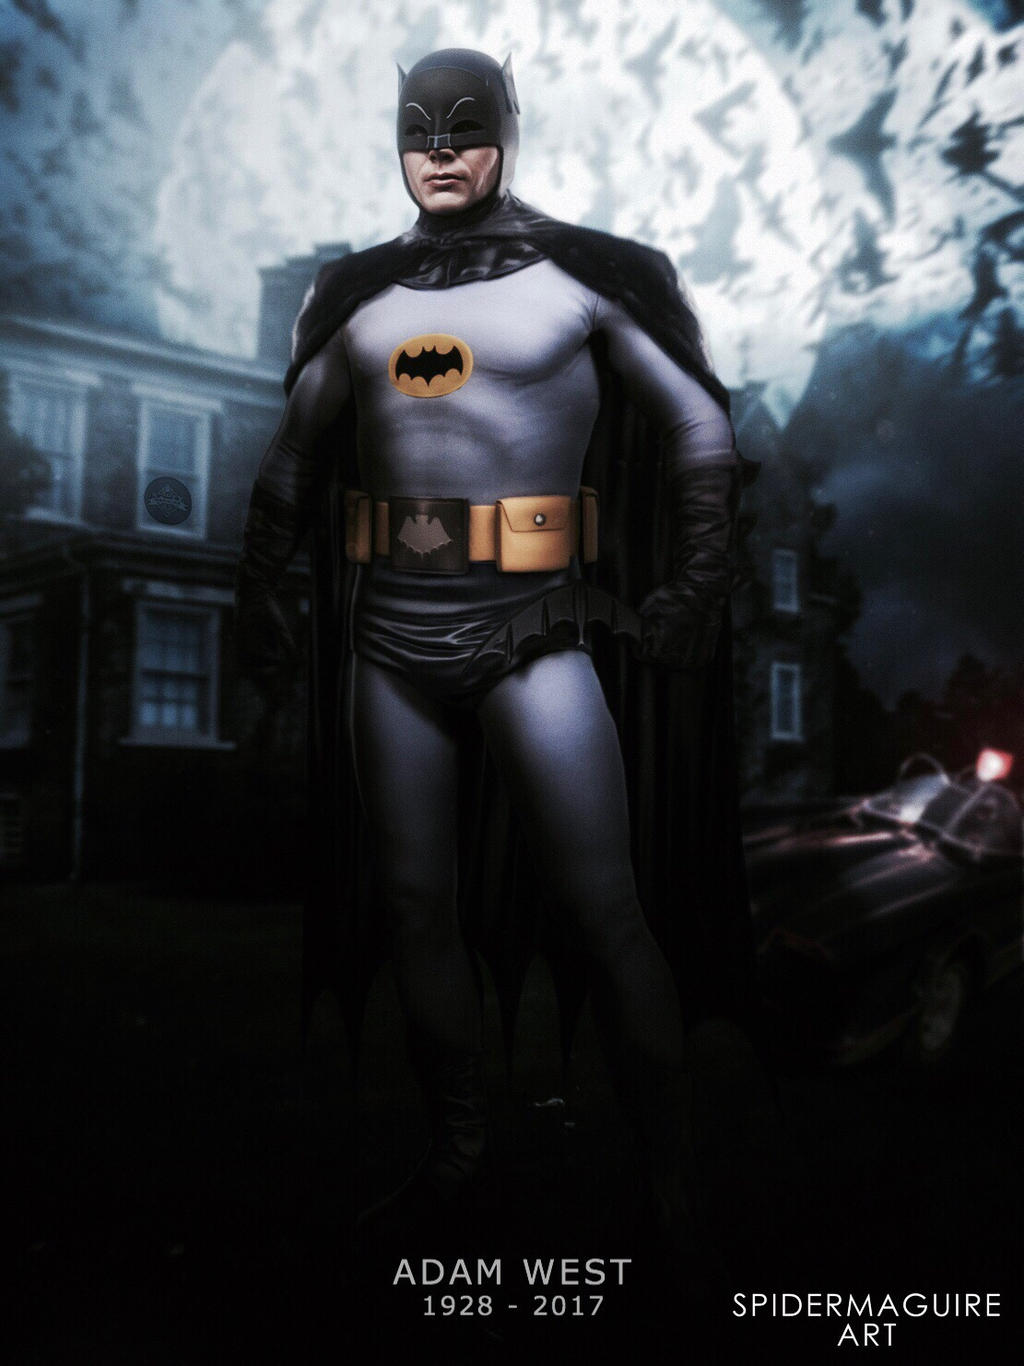 Kevin Conroy as Batman by Daviddv1202 on DeviantArt